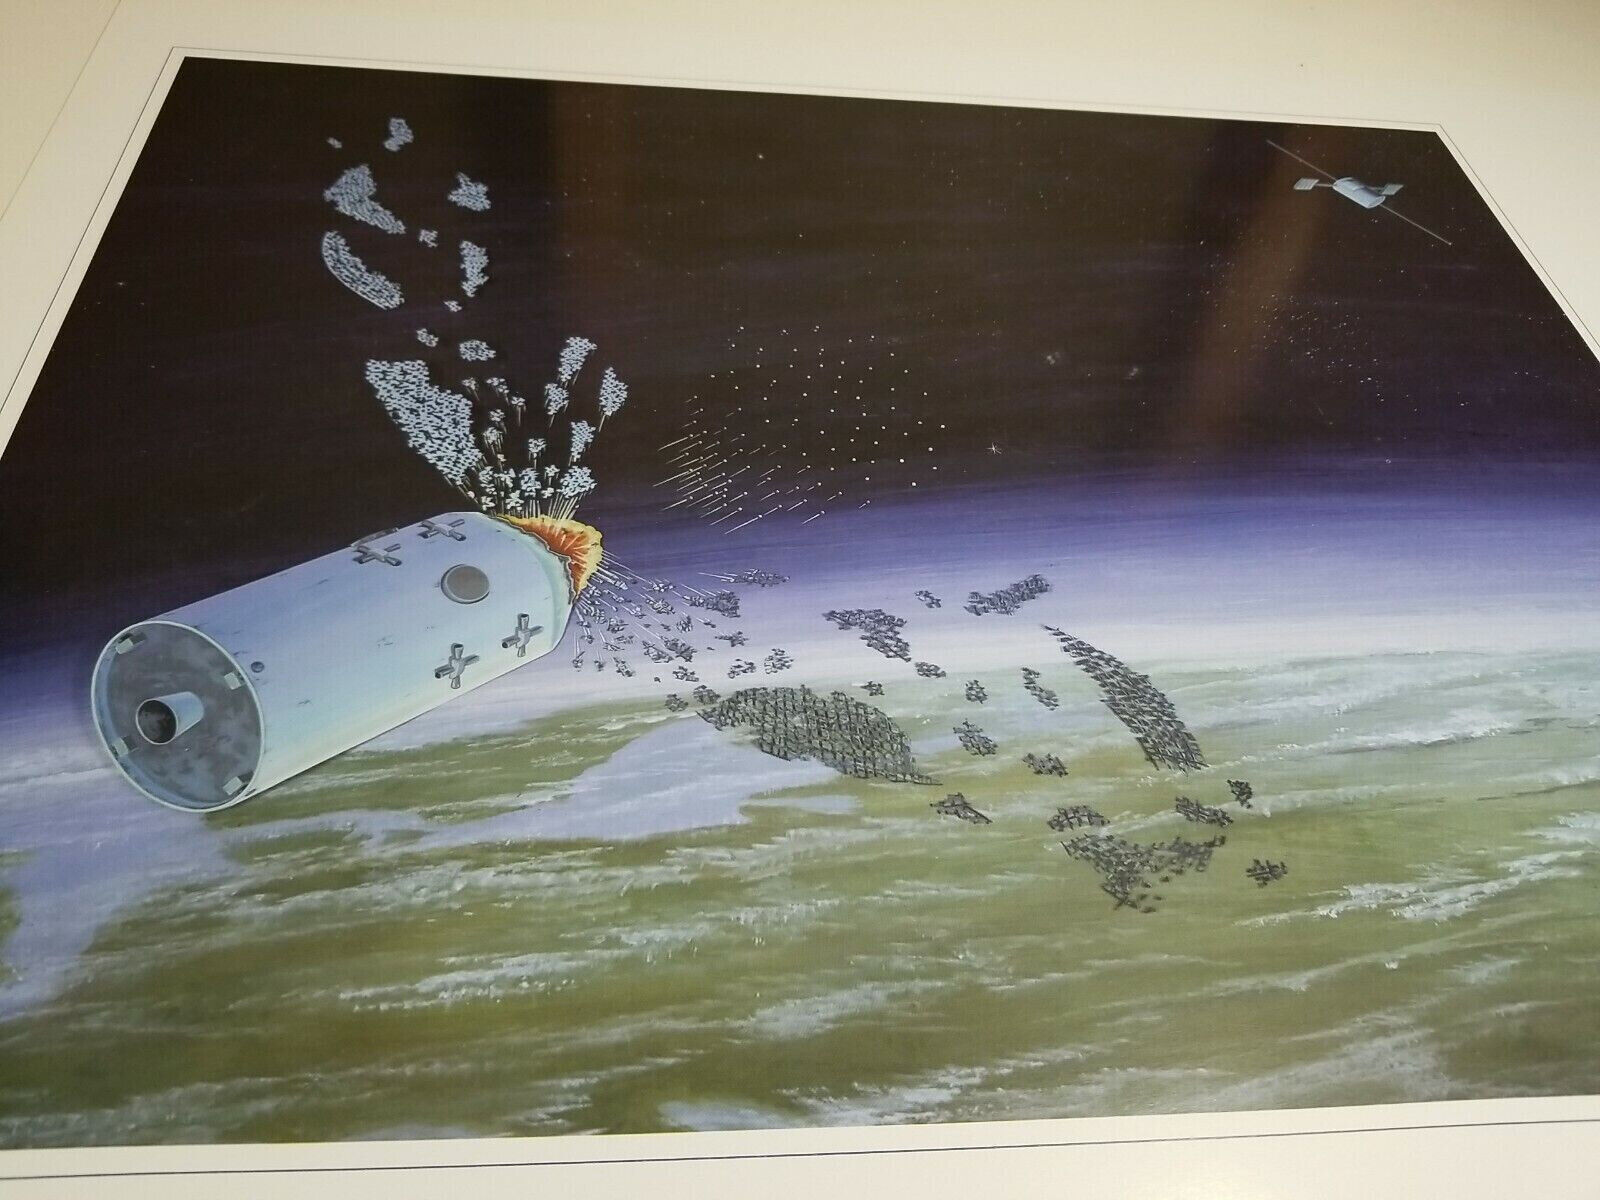 Soviet Anti-Satellite System DIA Military Art Series II; Threat in the 1980s